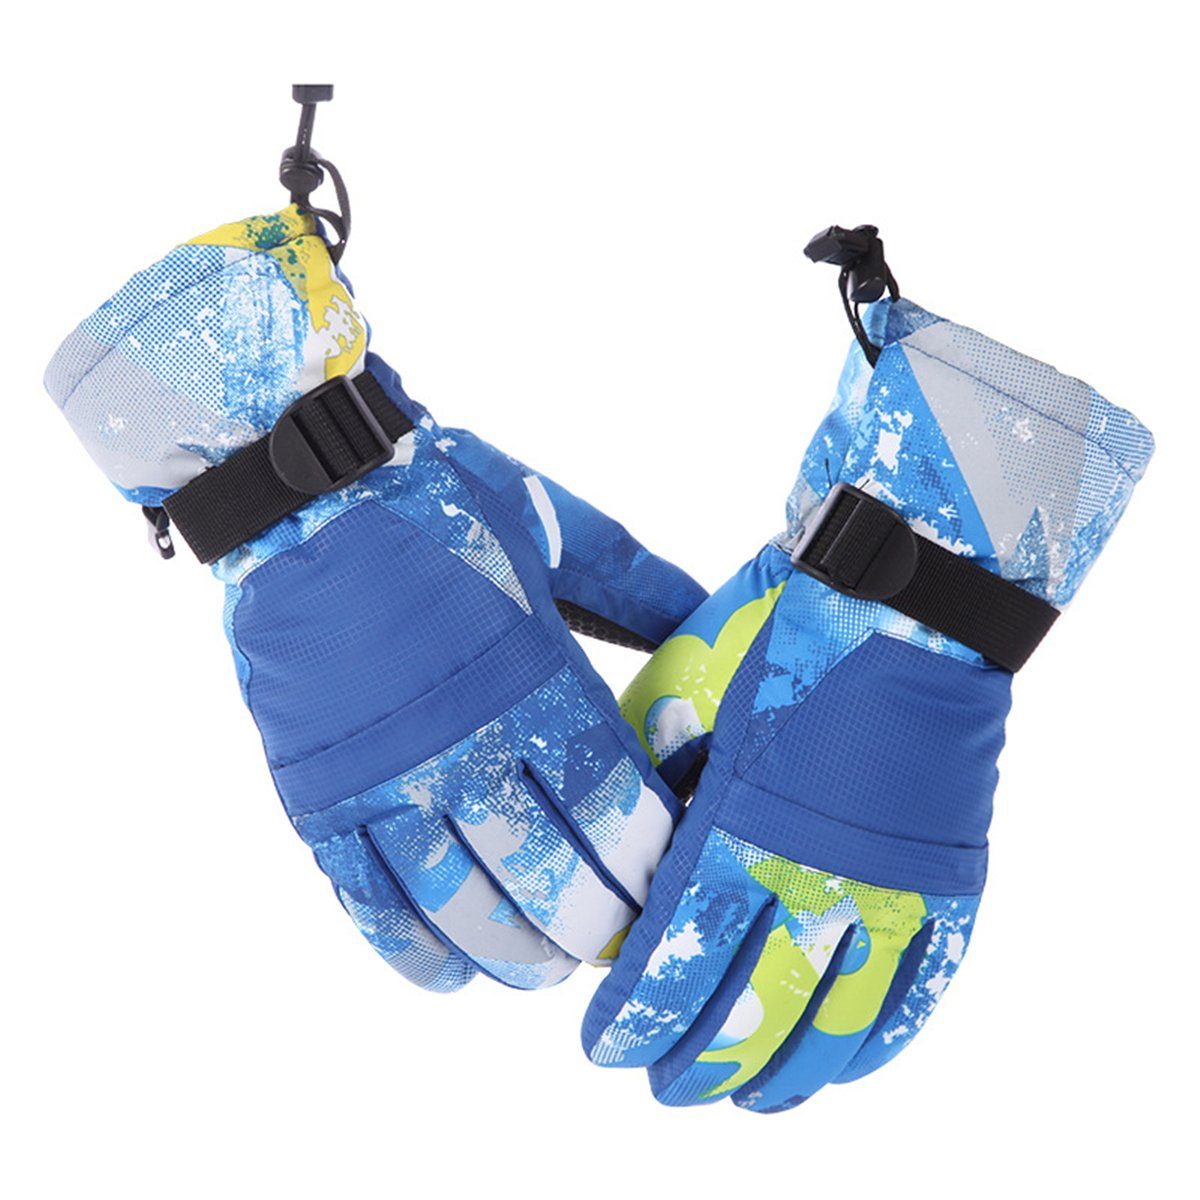 Sterne Langlaufhandschuhe Kinder/Männer/Damen Die Winter-Outdoor-Sport-Snowboard-Handschuhe Blau